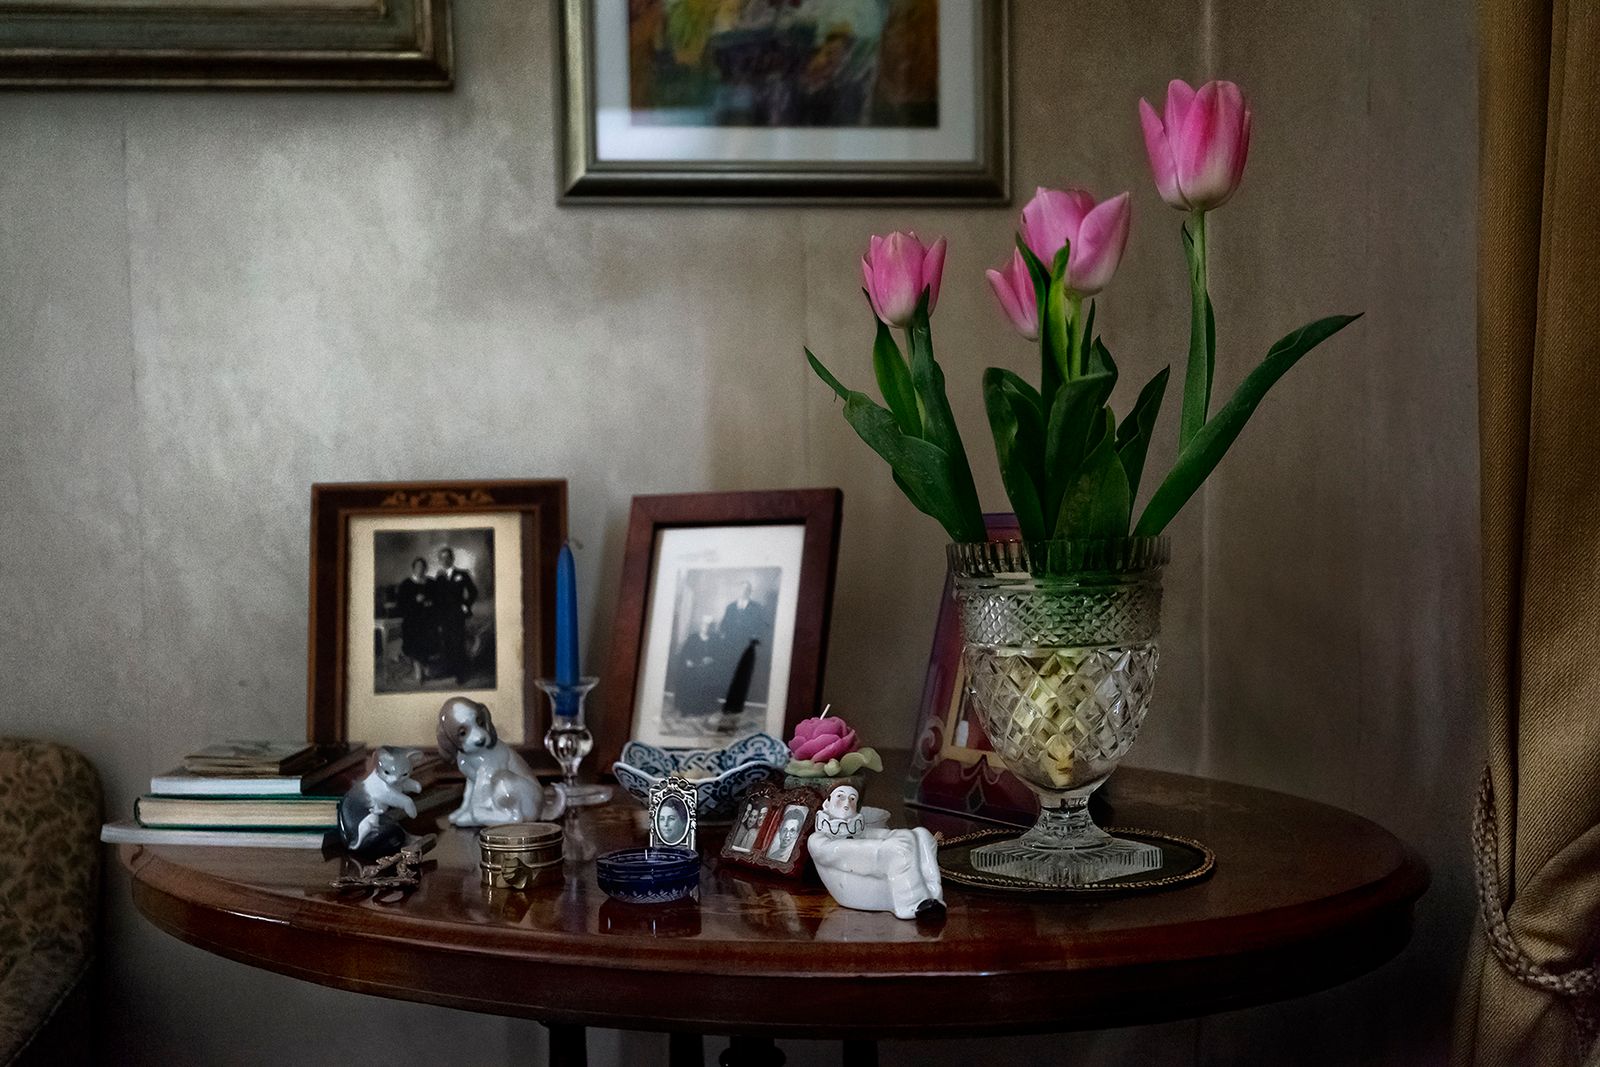 © Simona Bonanno - Home interior with vase and decorations.